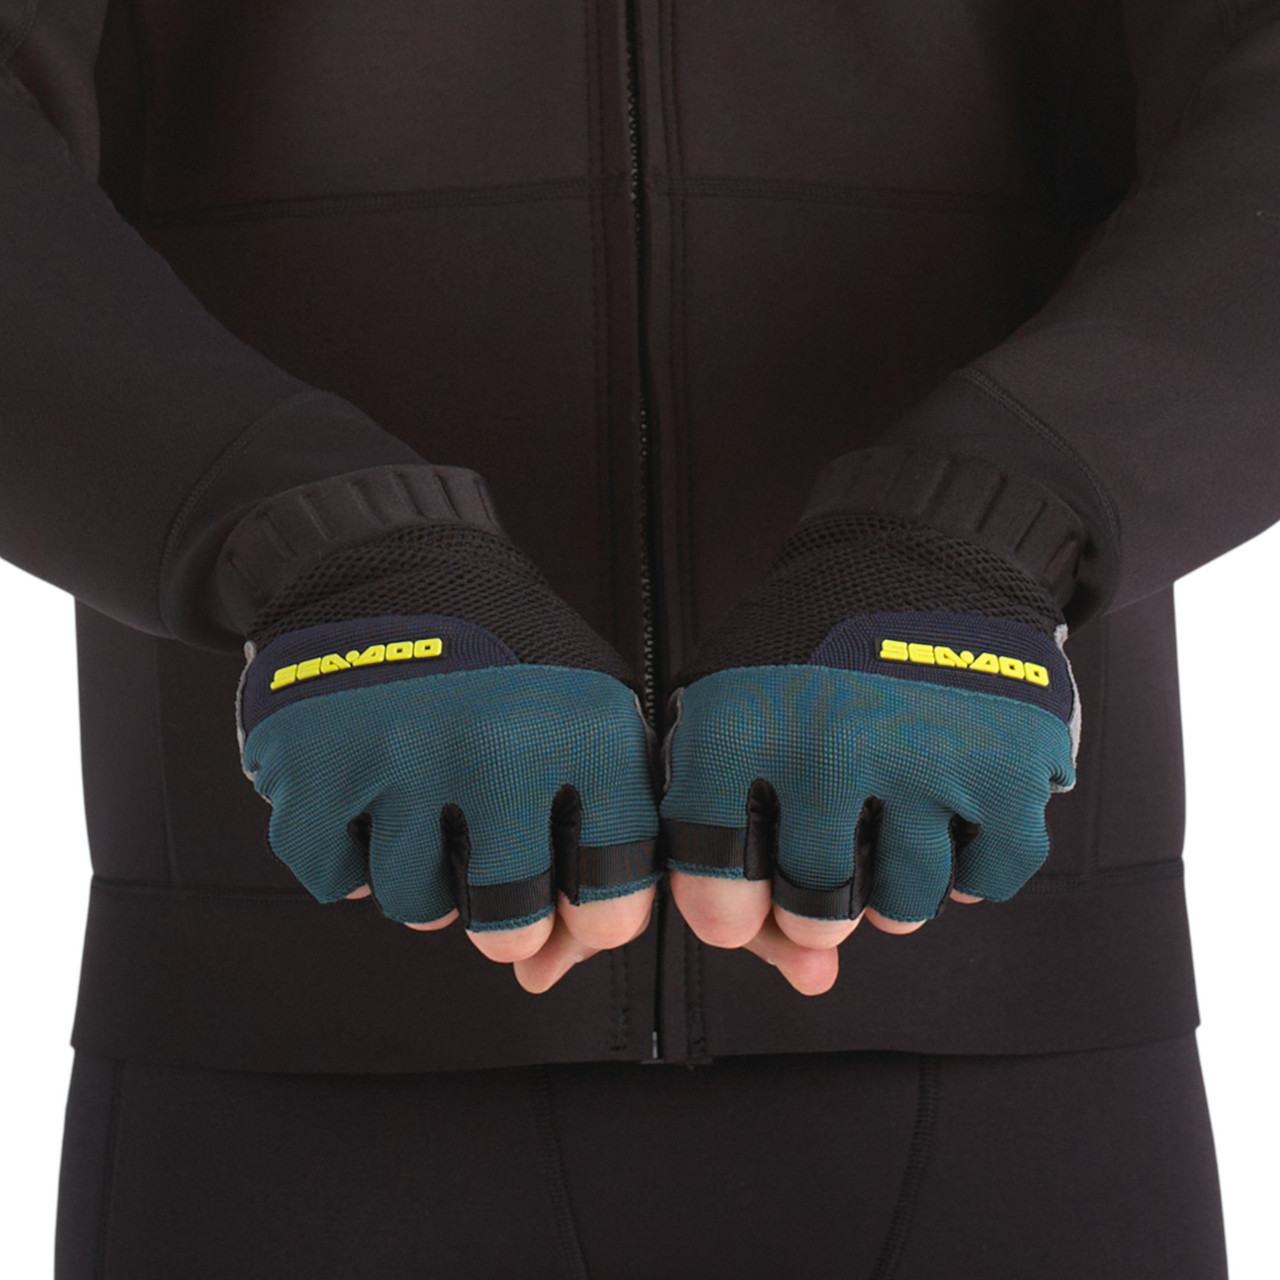 Sea-Doo New OEM, Unisex Extra Small Stretch Choppy Shorty Gloves, 4463330274